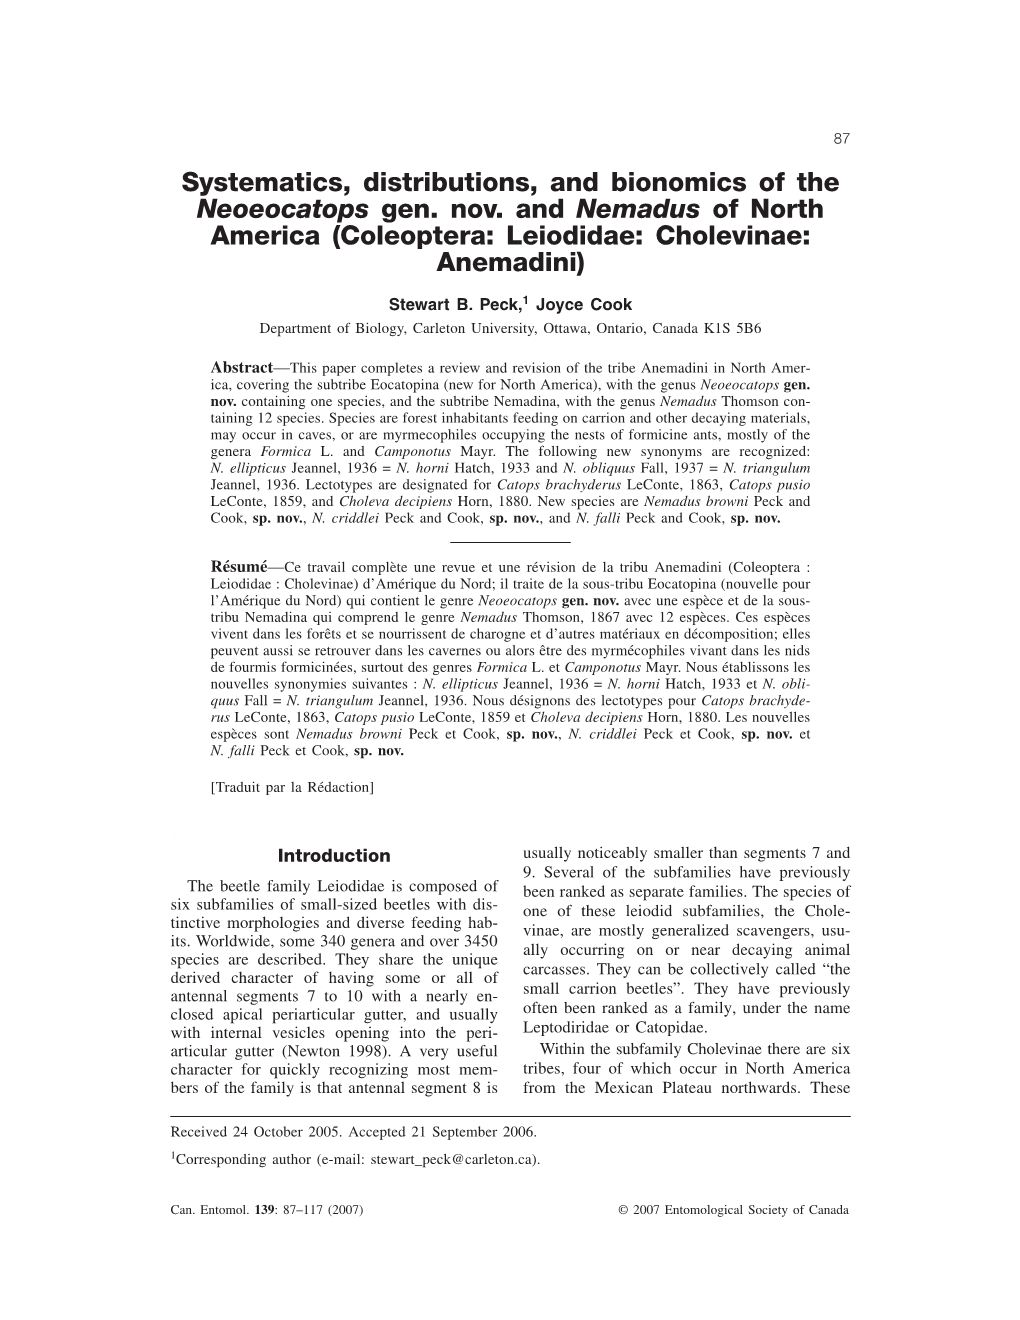 Systematics, Distributions, and Bionomics of the Neoeocatops Gen. Nov. and Nemadus of North America (Coleoptera: Leiodidae: Cholevinae: Anemadini)